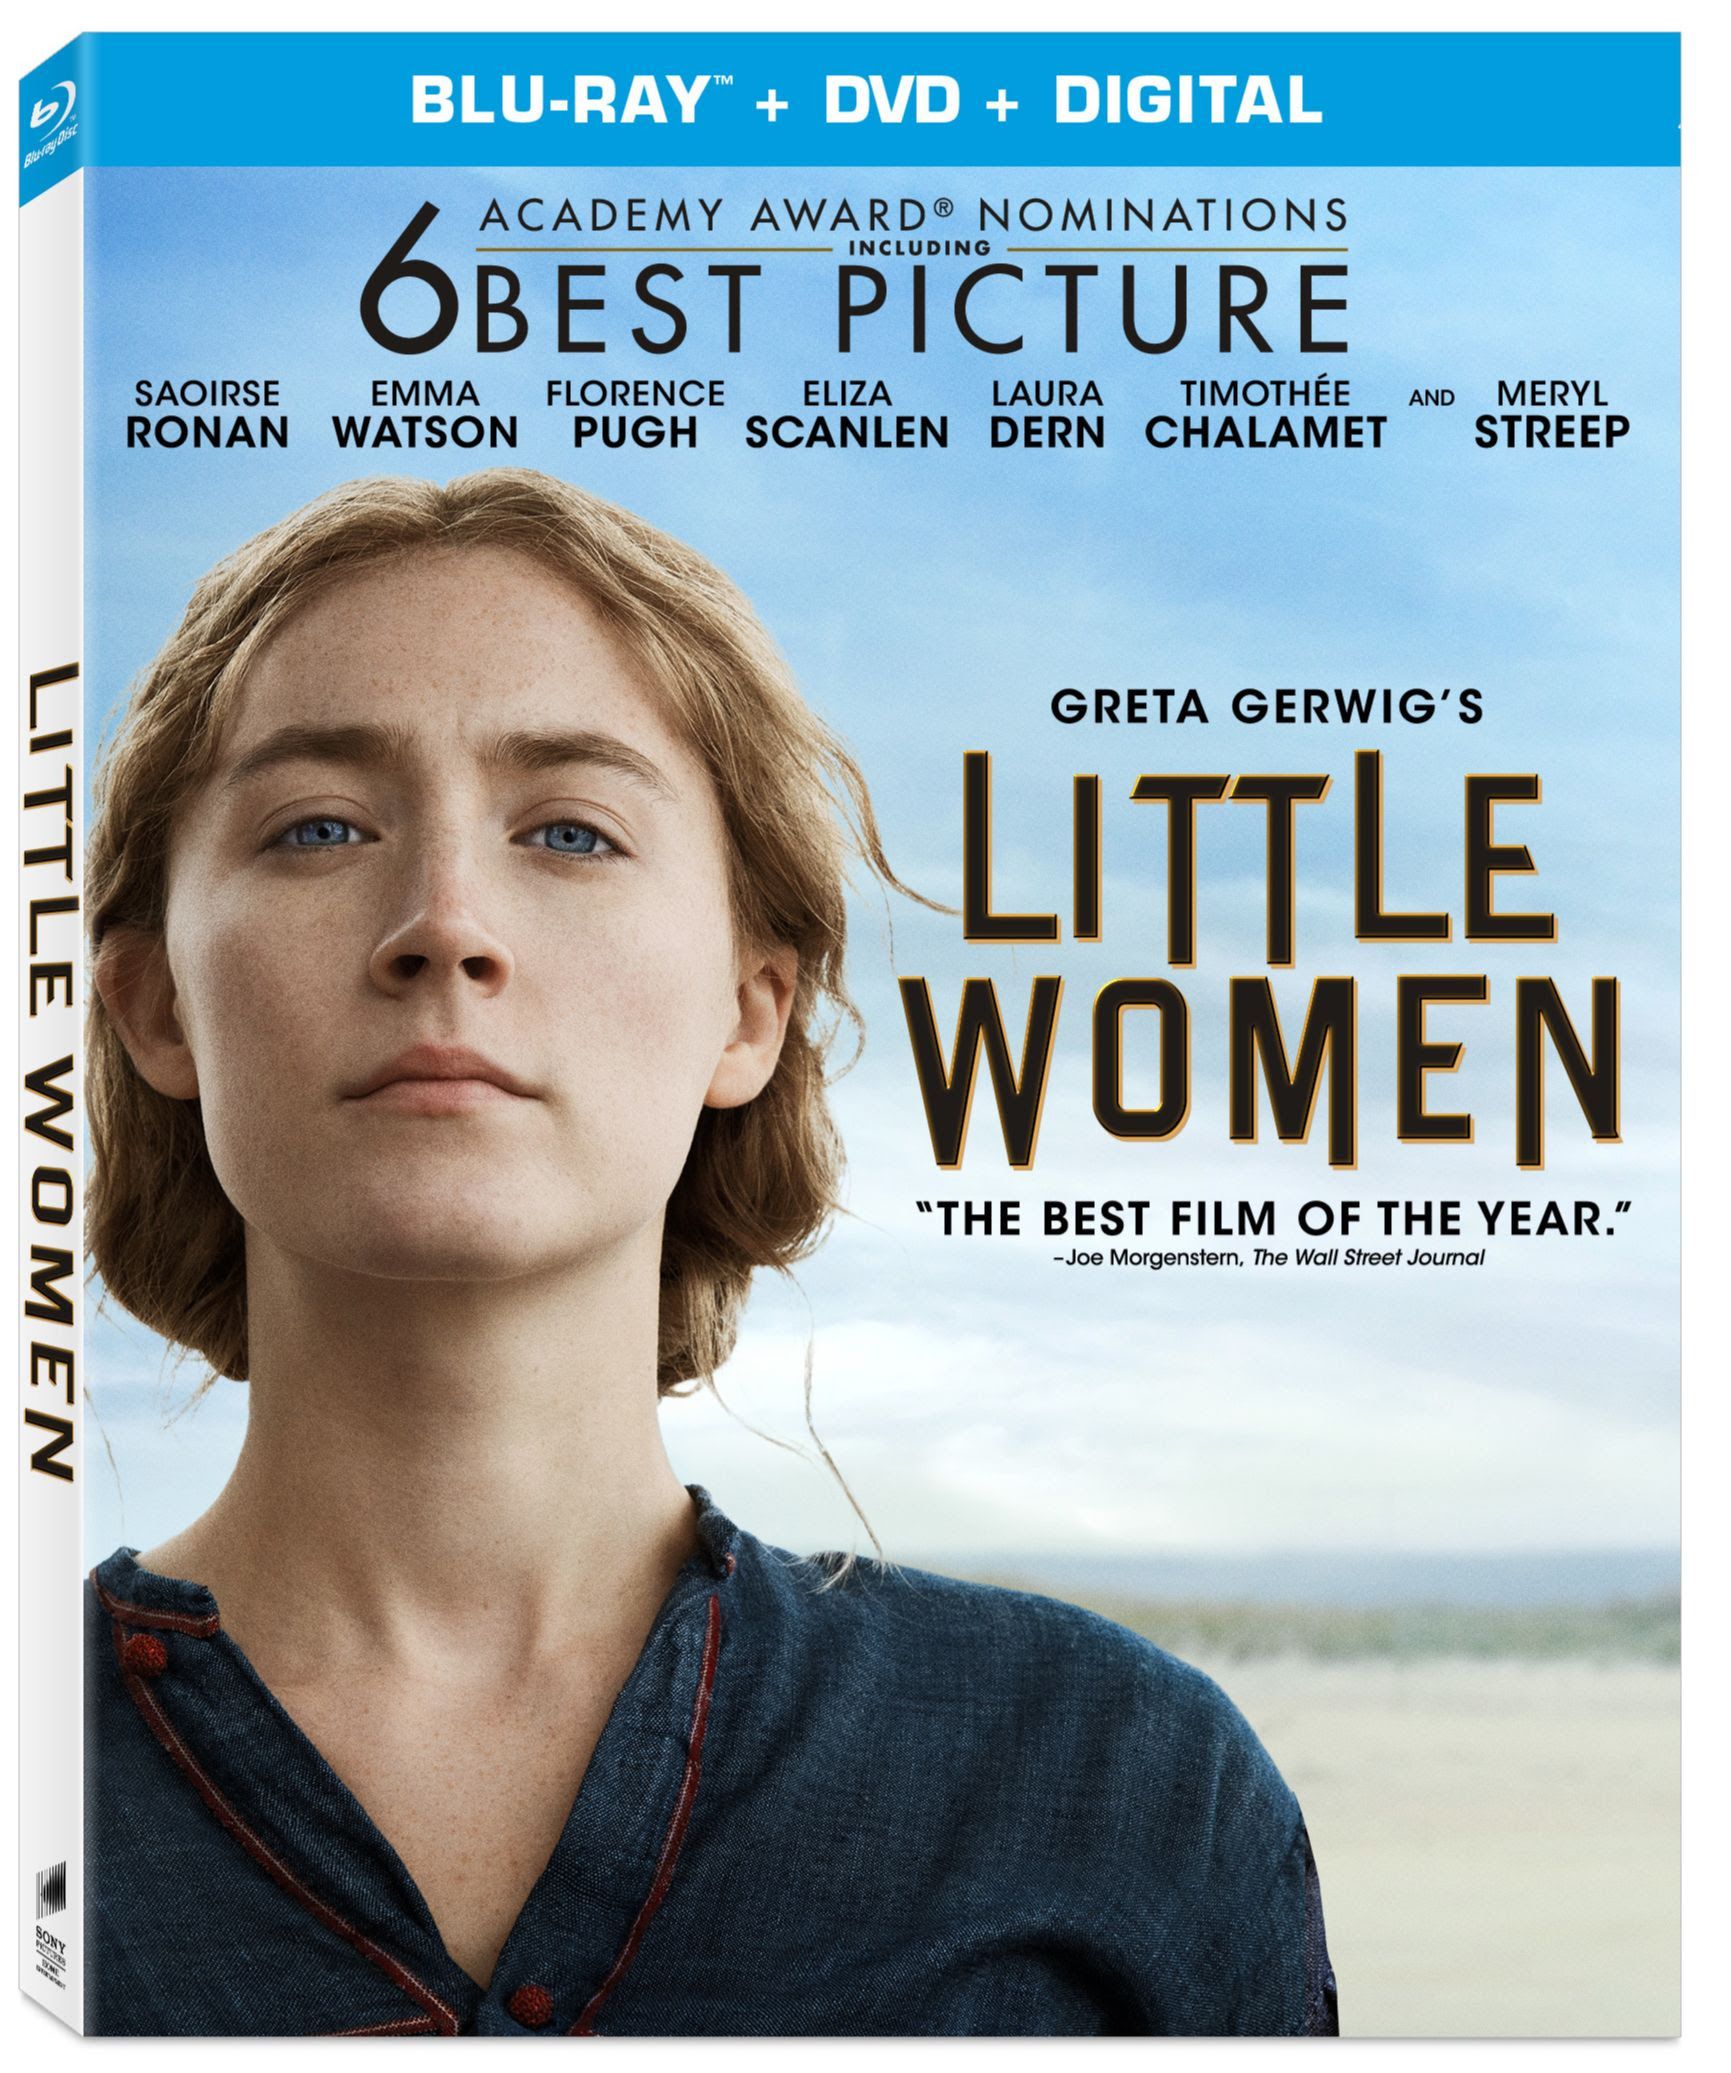 Little Women 2019 Blu-Ray Cover Art